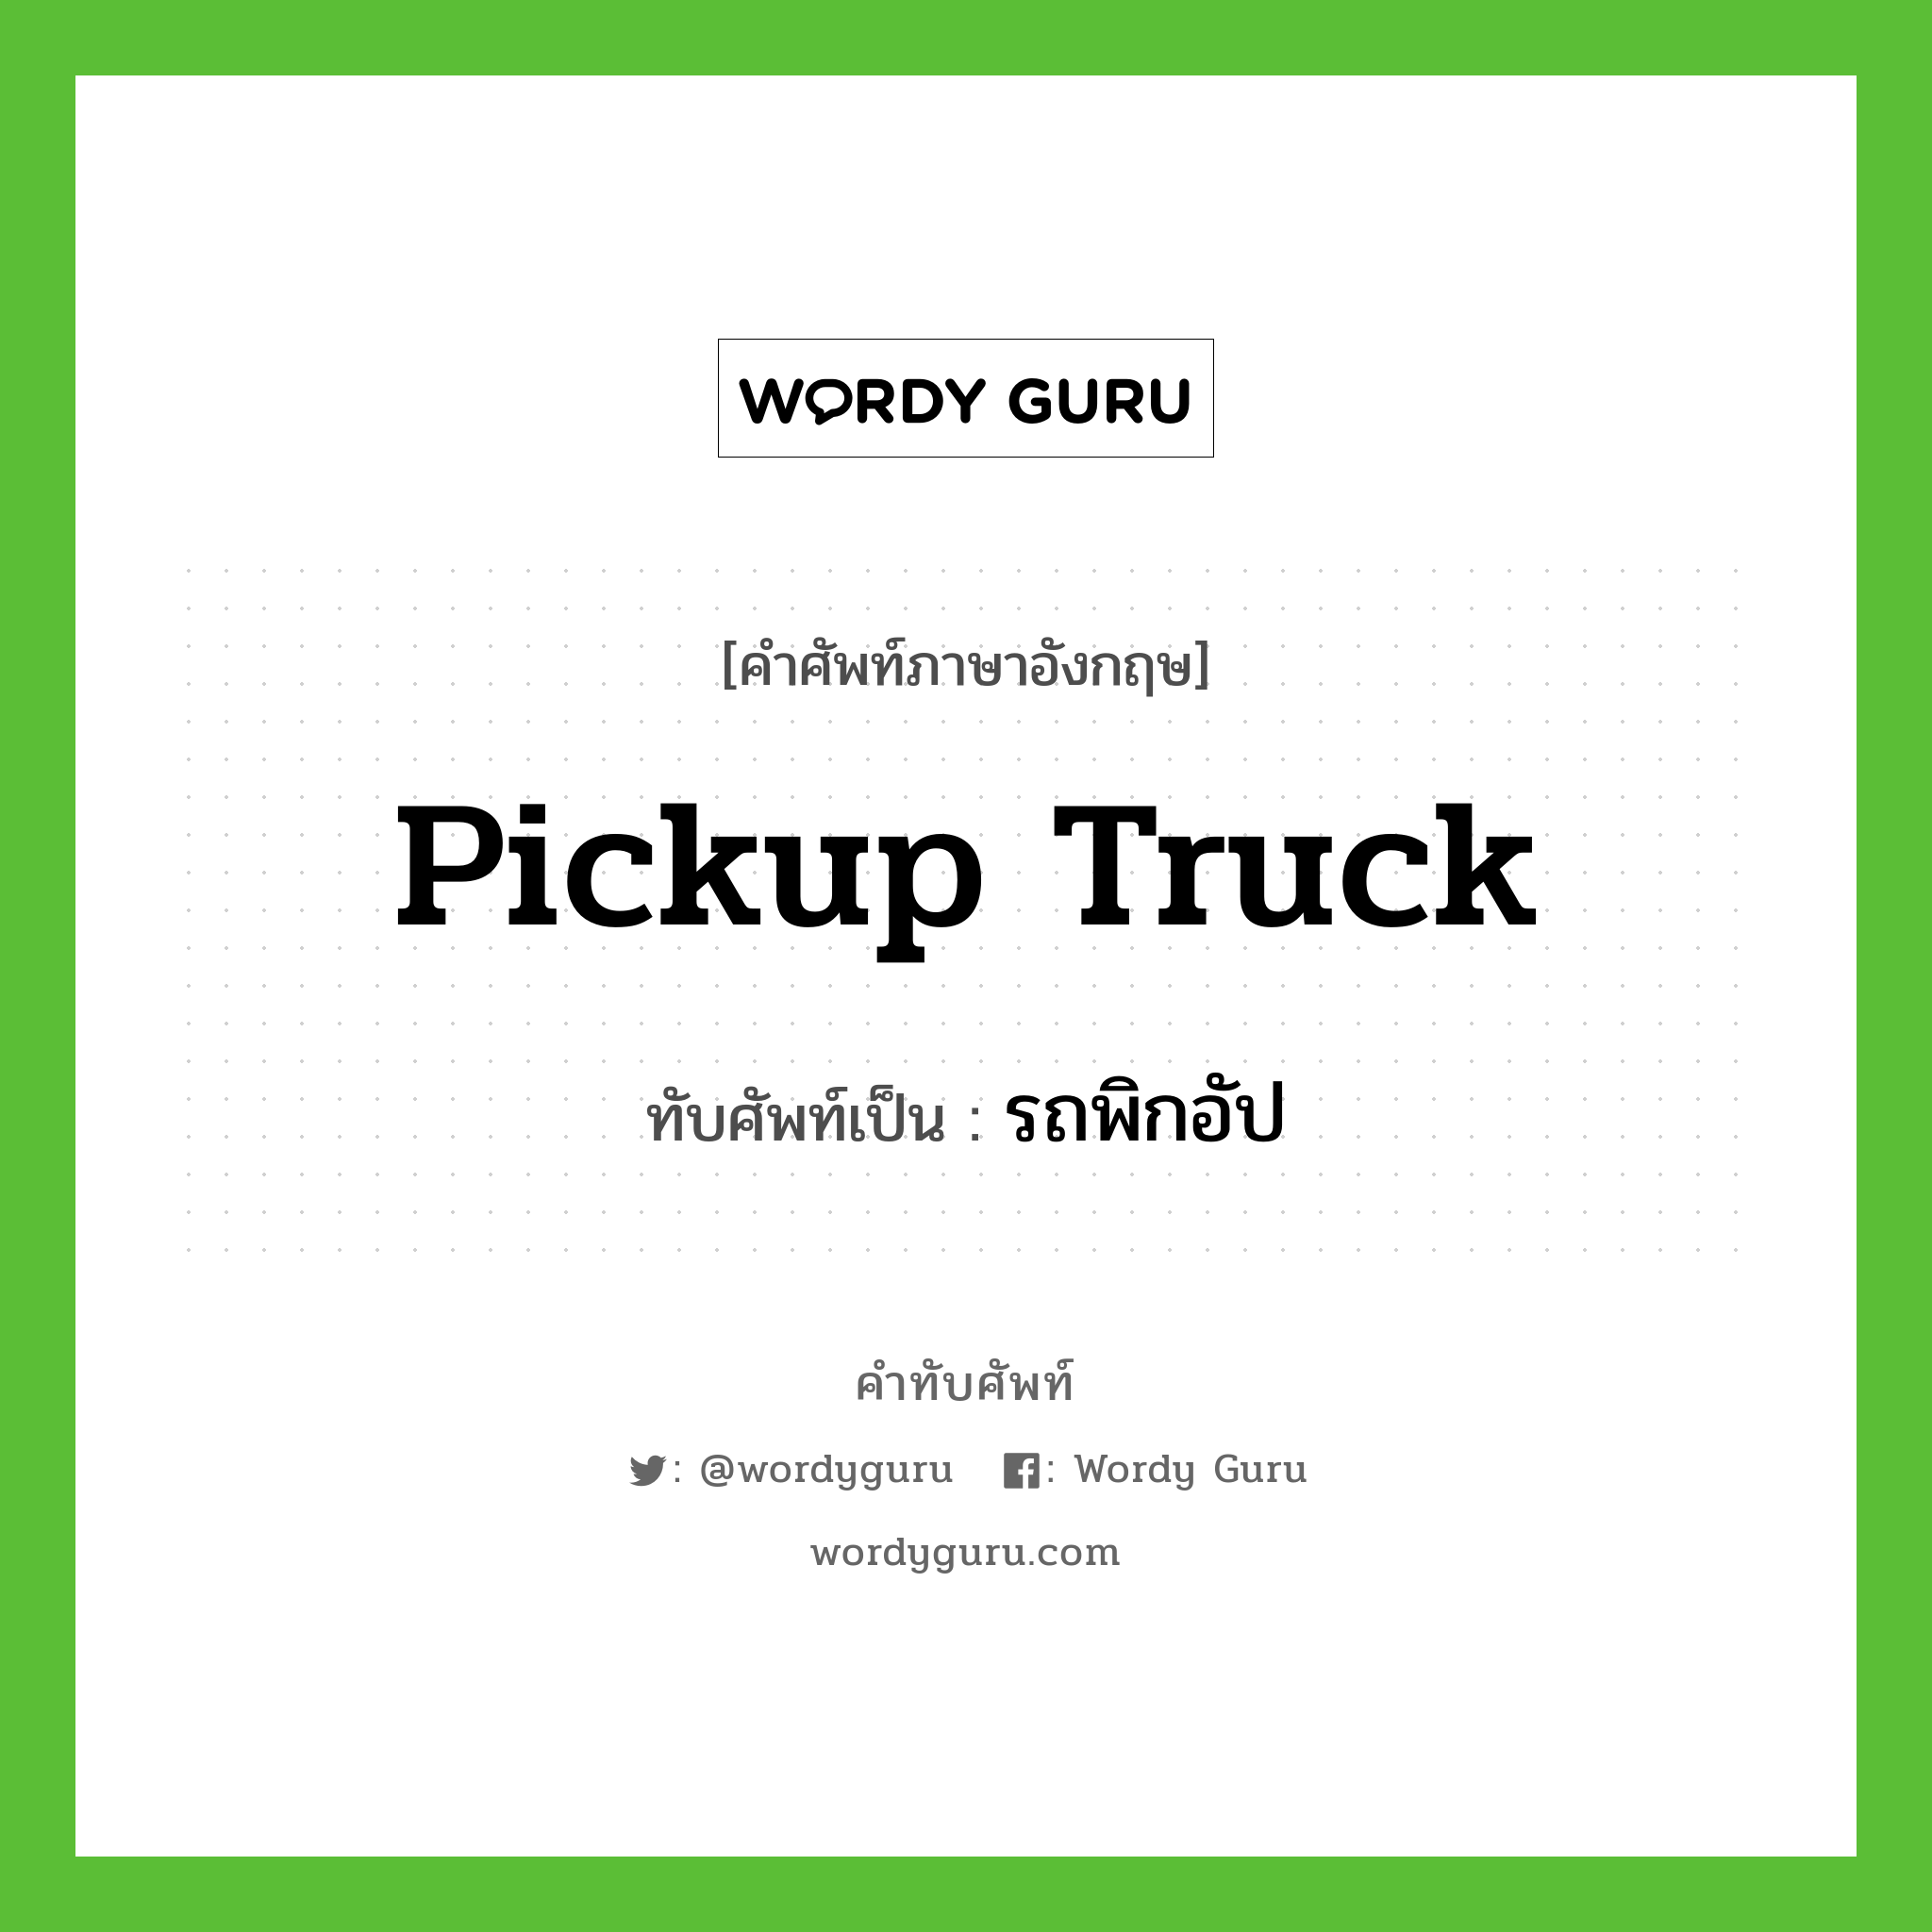 pickup truck เขียนเป็นคำไทยว่าอะไร?, คำศัพท์ภาษาอังกฤษ pickup truck ทับศัพท์เป็น รถพิกอัป